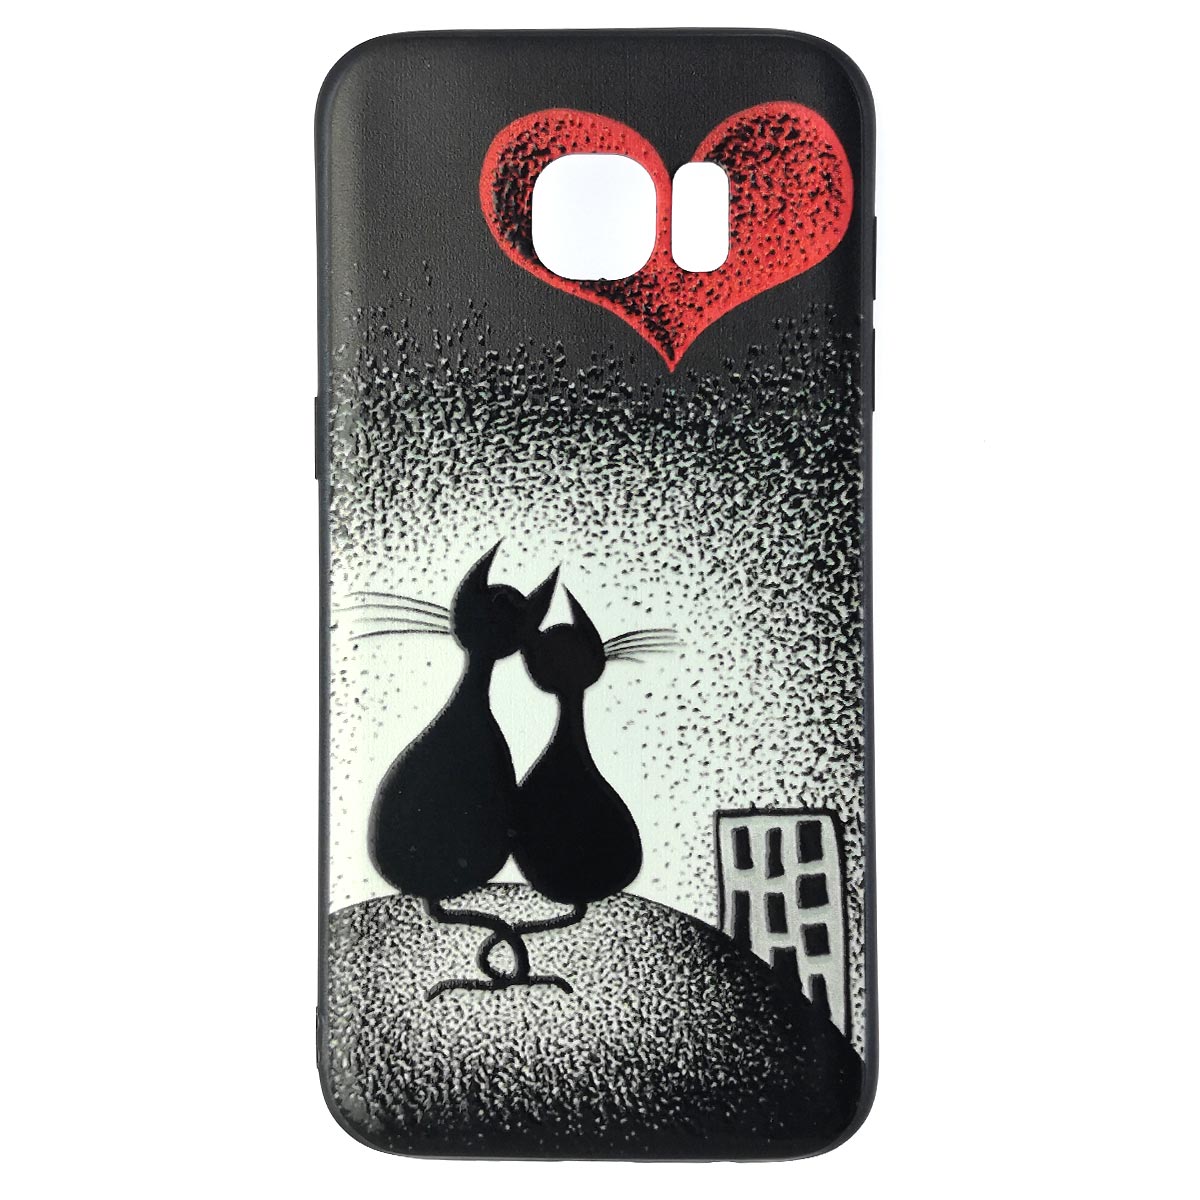 Чехол накладка для SAMSUNG Galaxy S7 Edge (SM-G935), cиликон, рисунок Сердце, кошечки